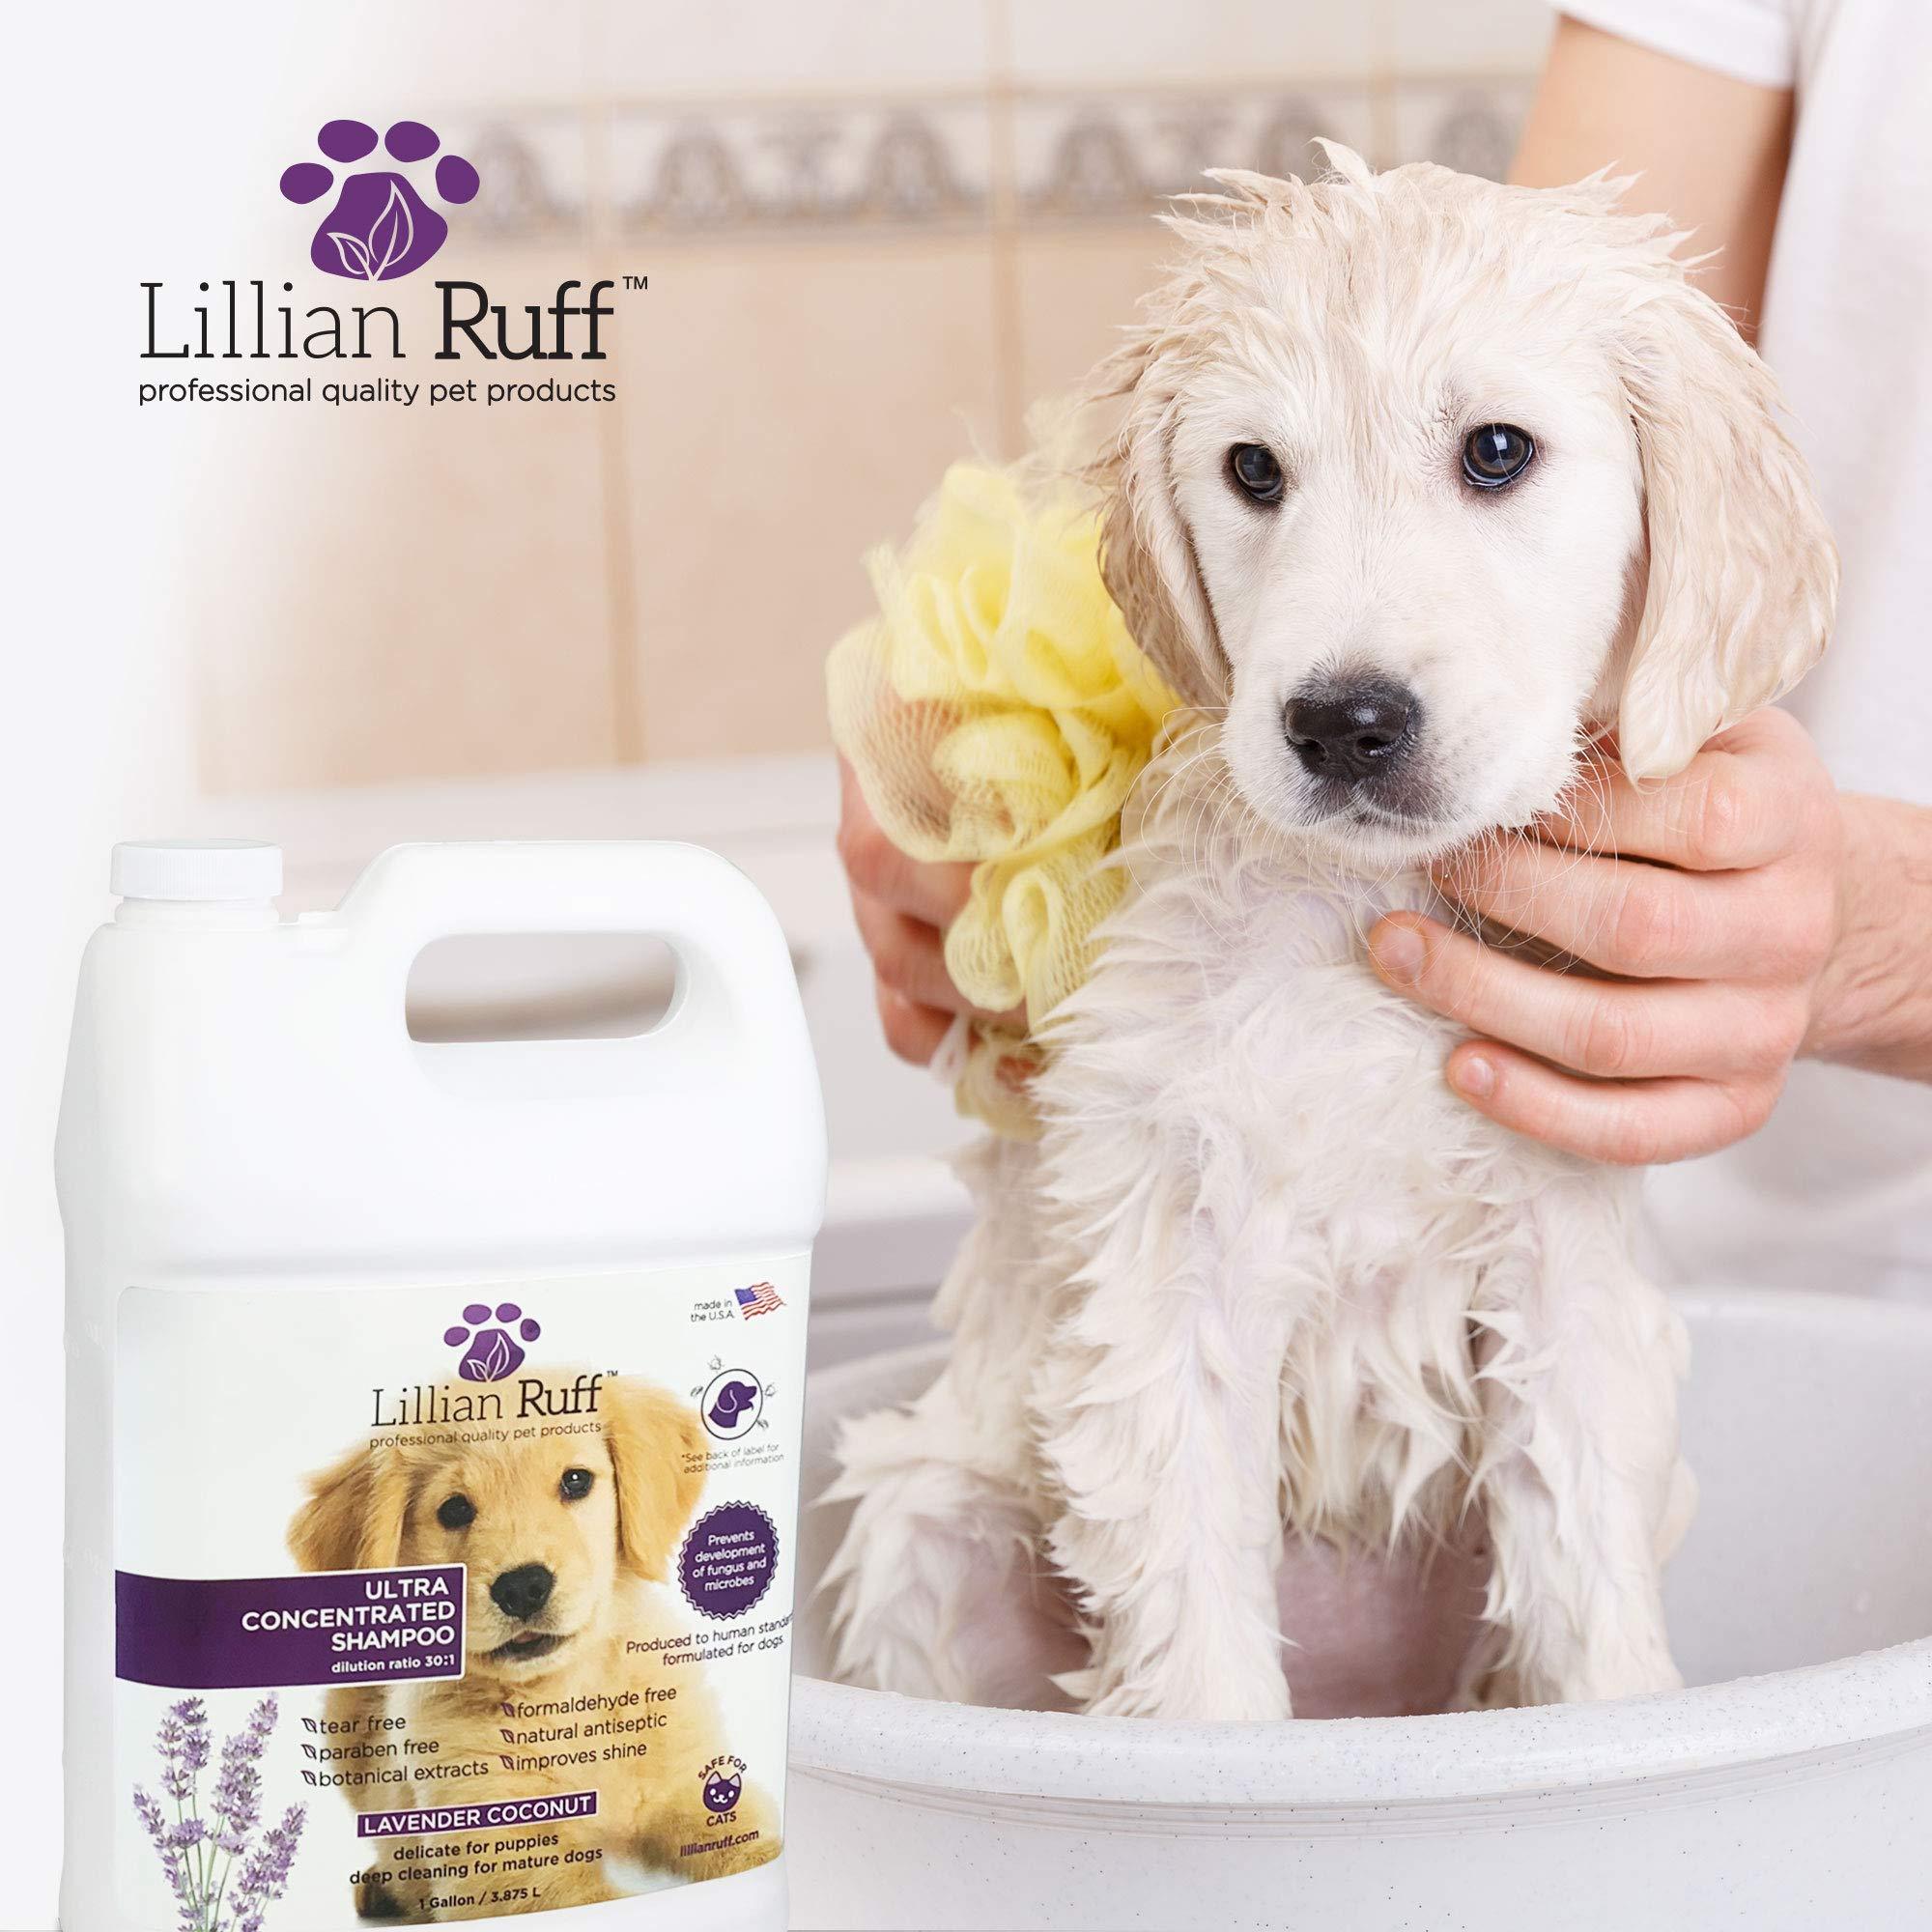 Ultra Concentrated Shampoo - Lillian Ruff-LR-ULTRACONCENTRATE1GALLON-FBA